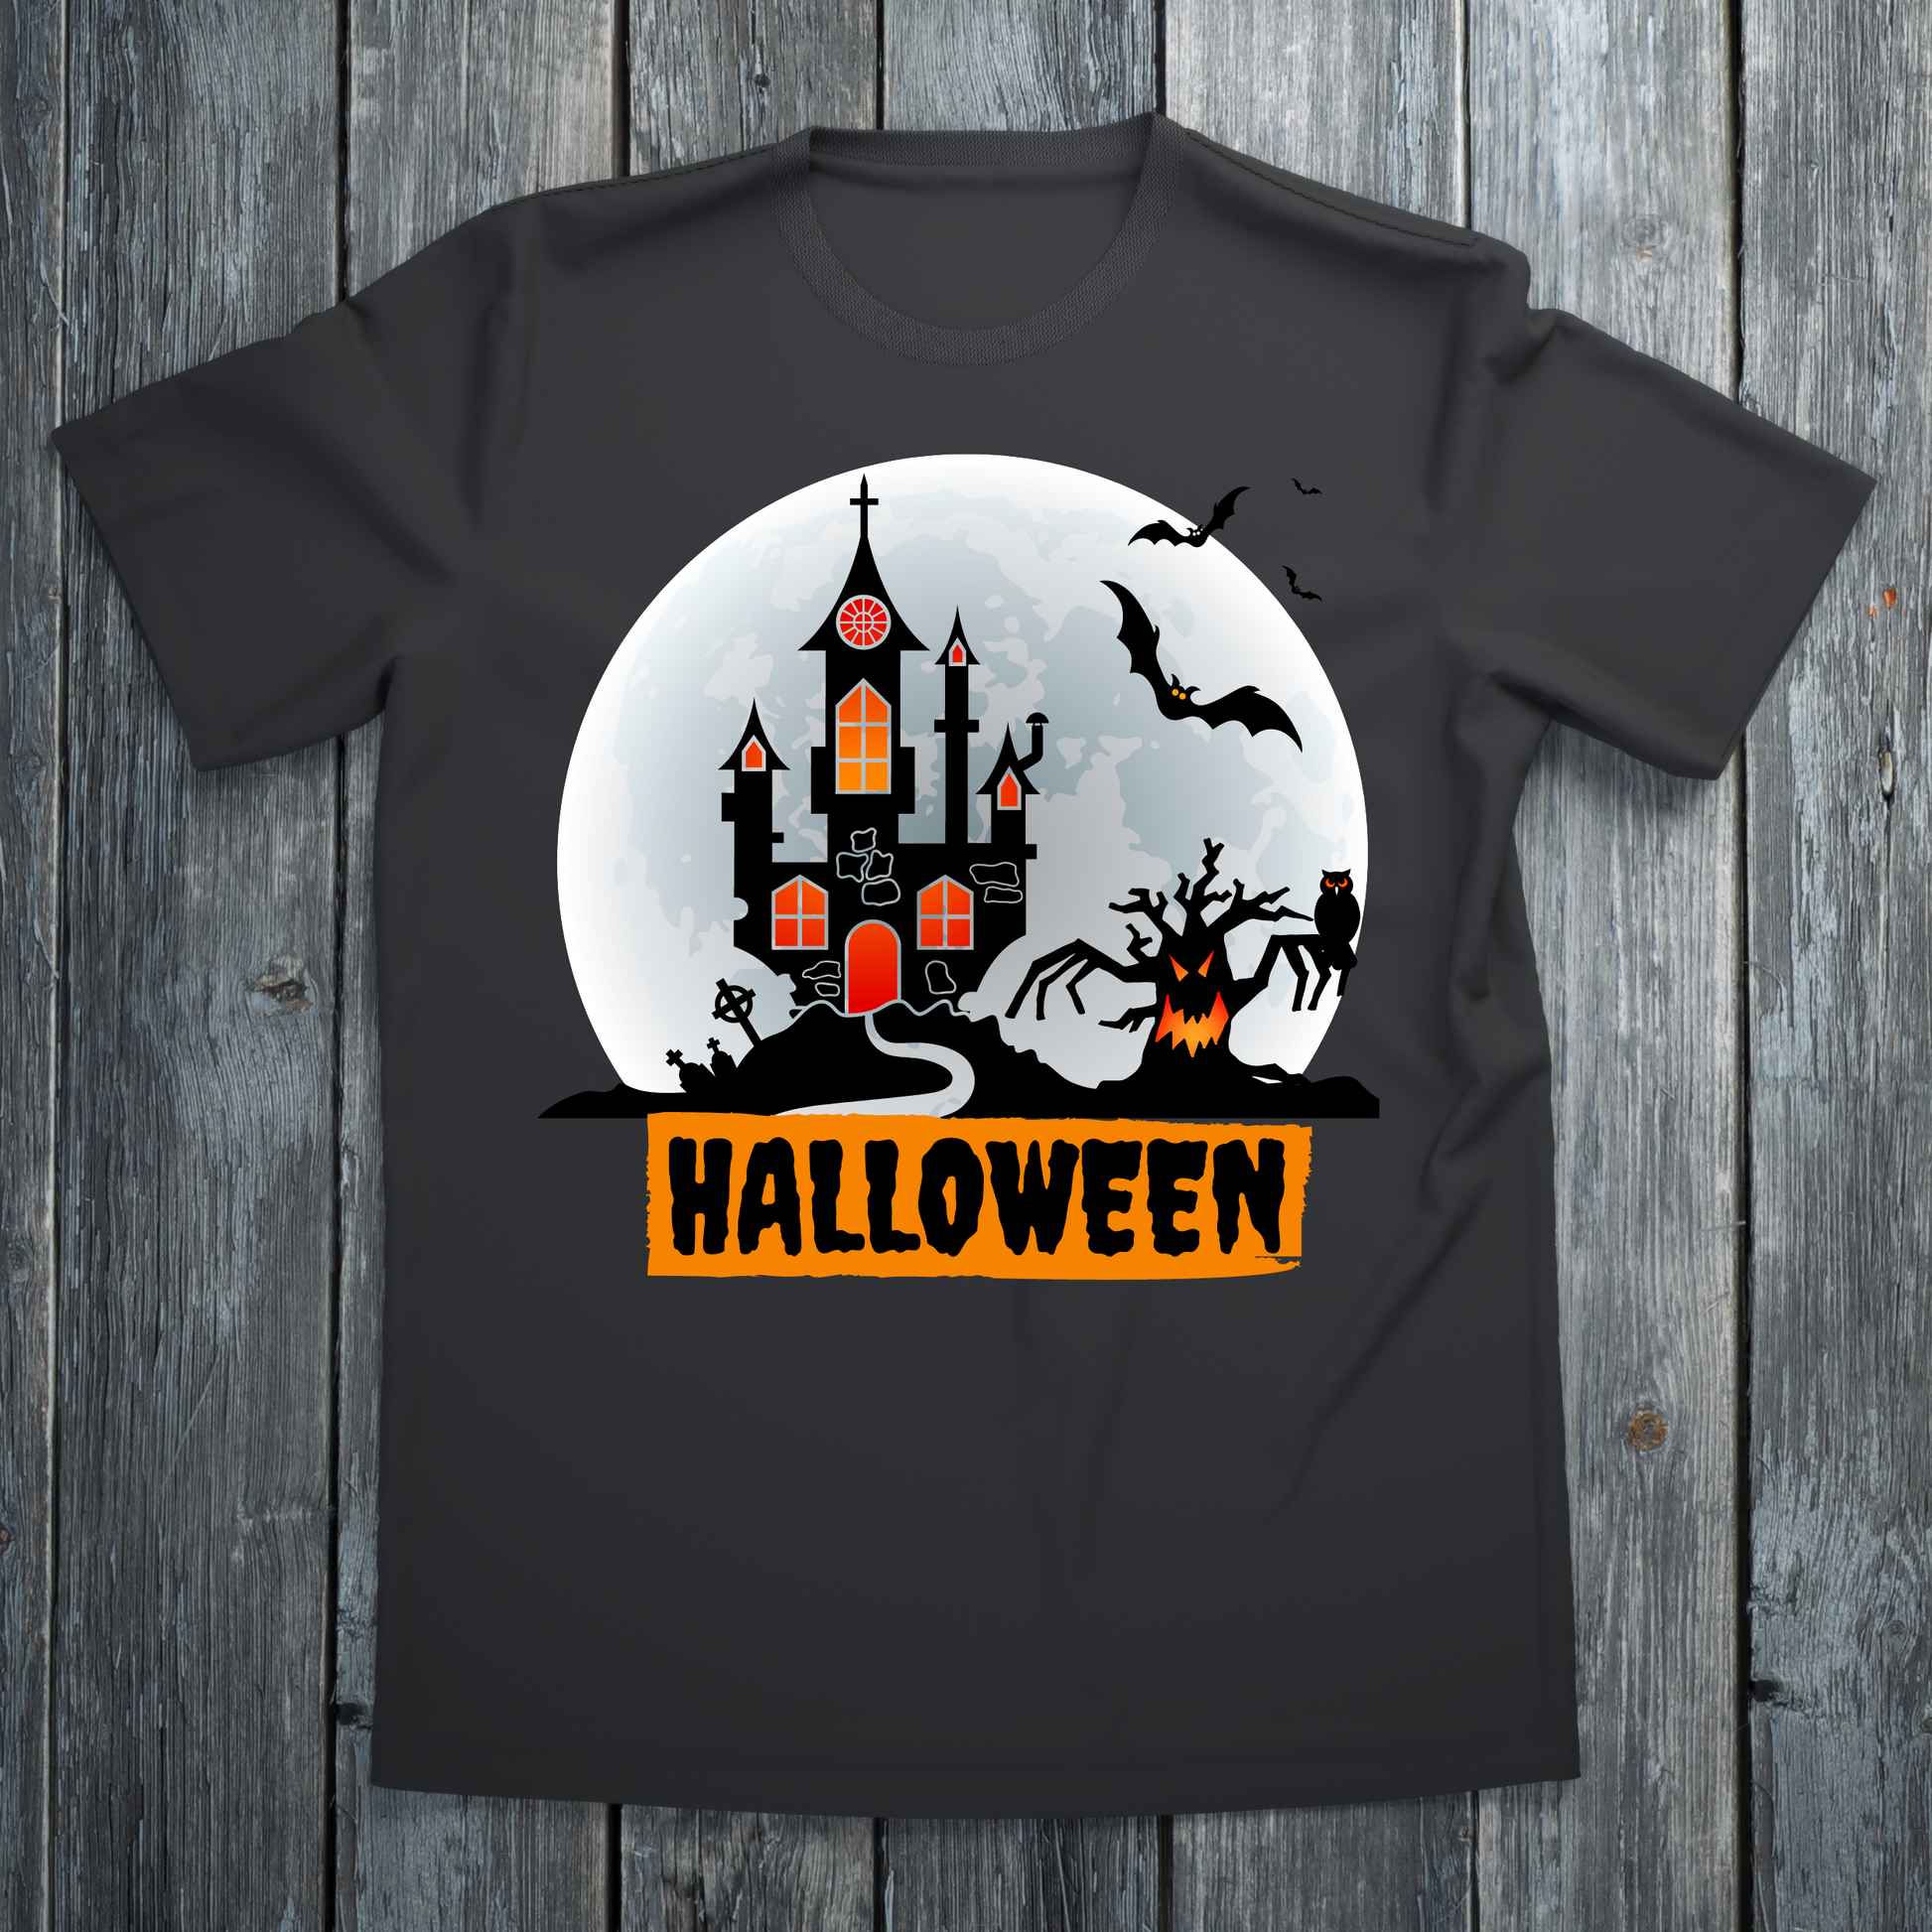 Haunted manor - Men's halloween shirt - Premium t-shirt from Lees Krazy Teez - Just $24.95! Shop now at Lees Krazy Teez